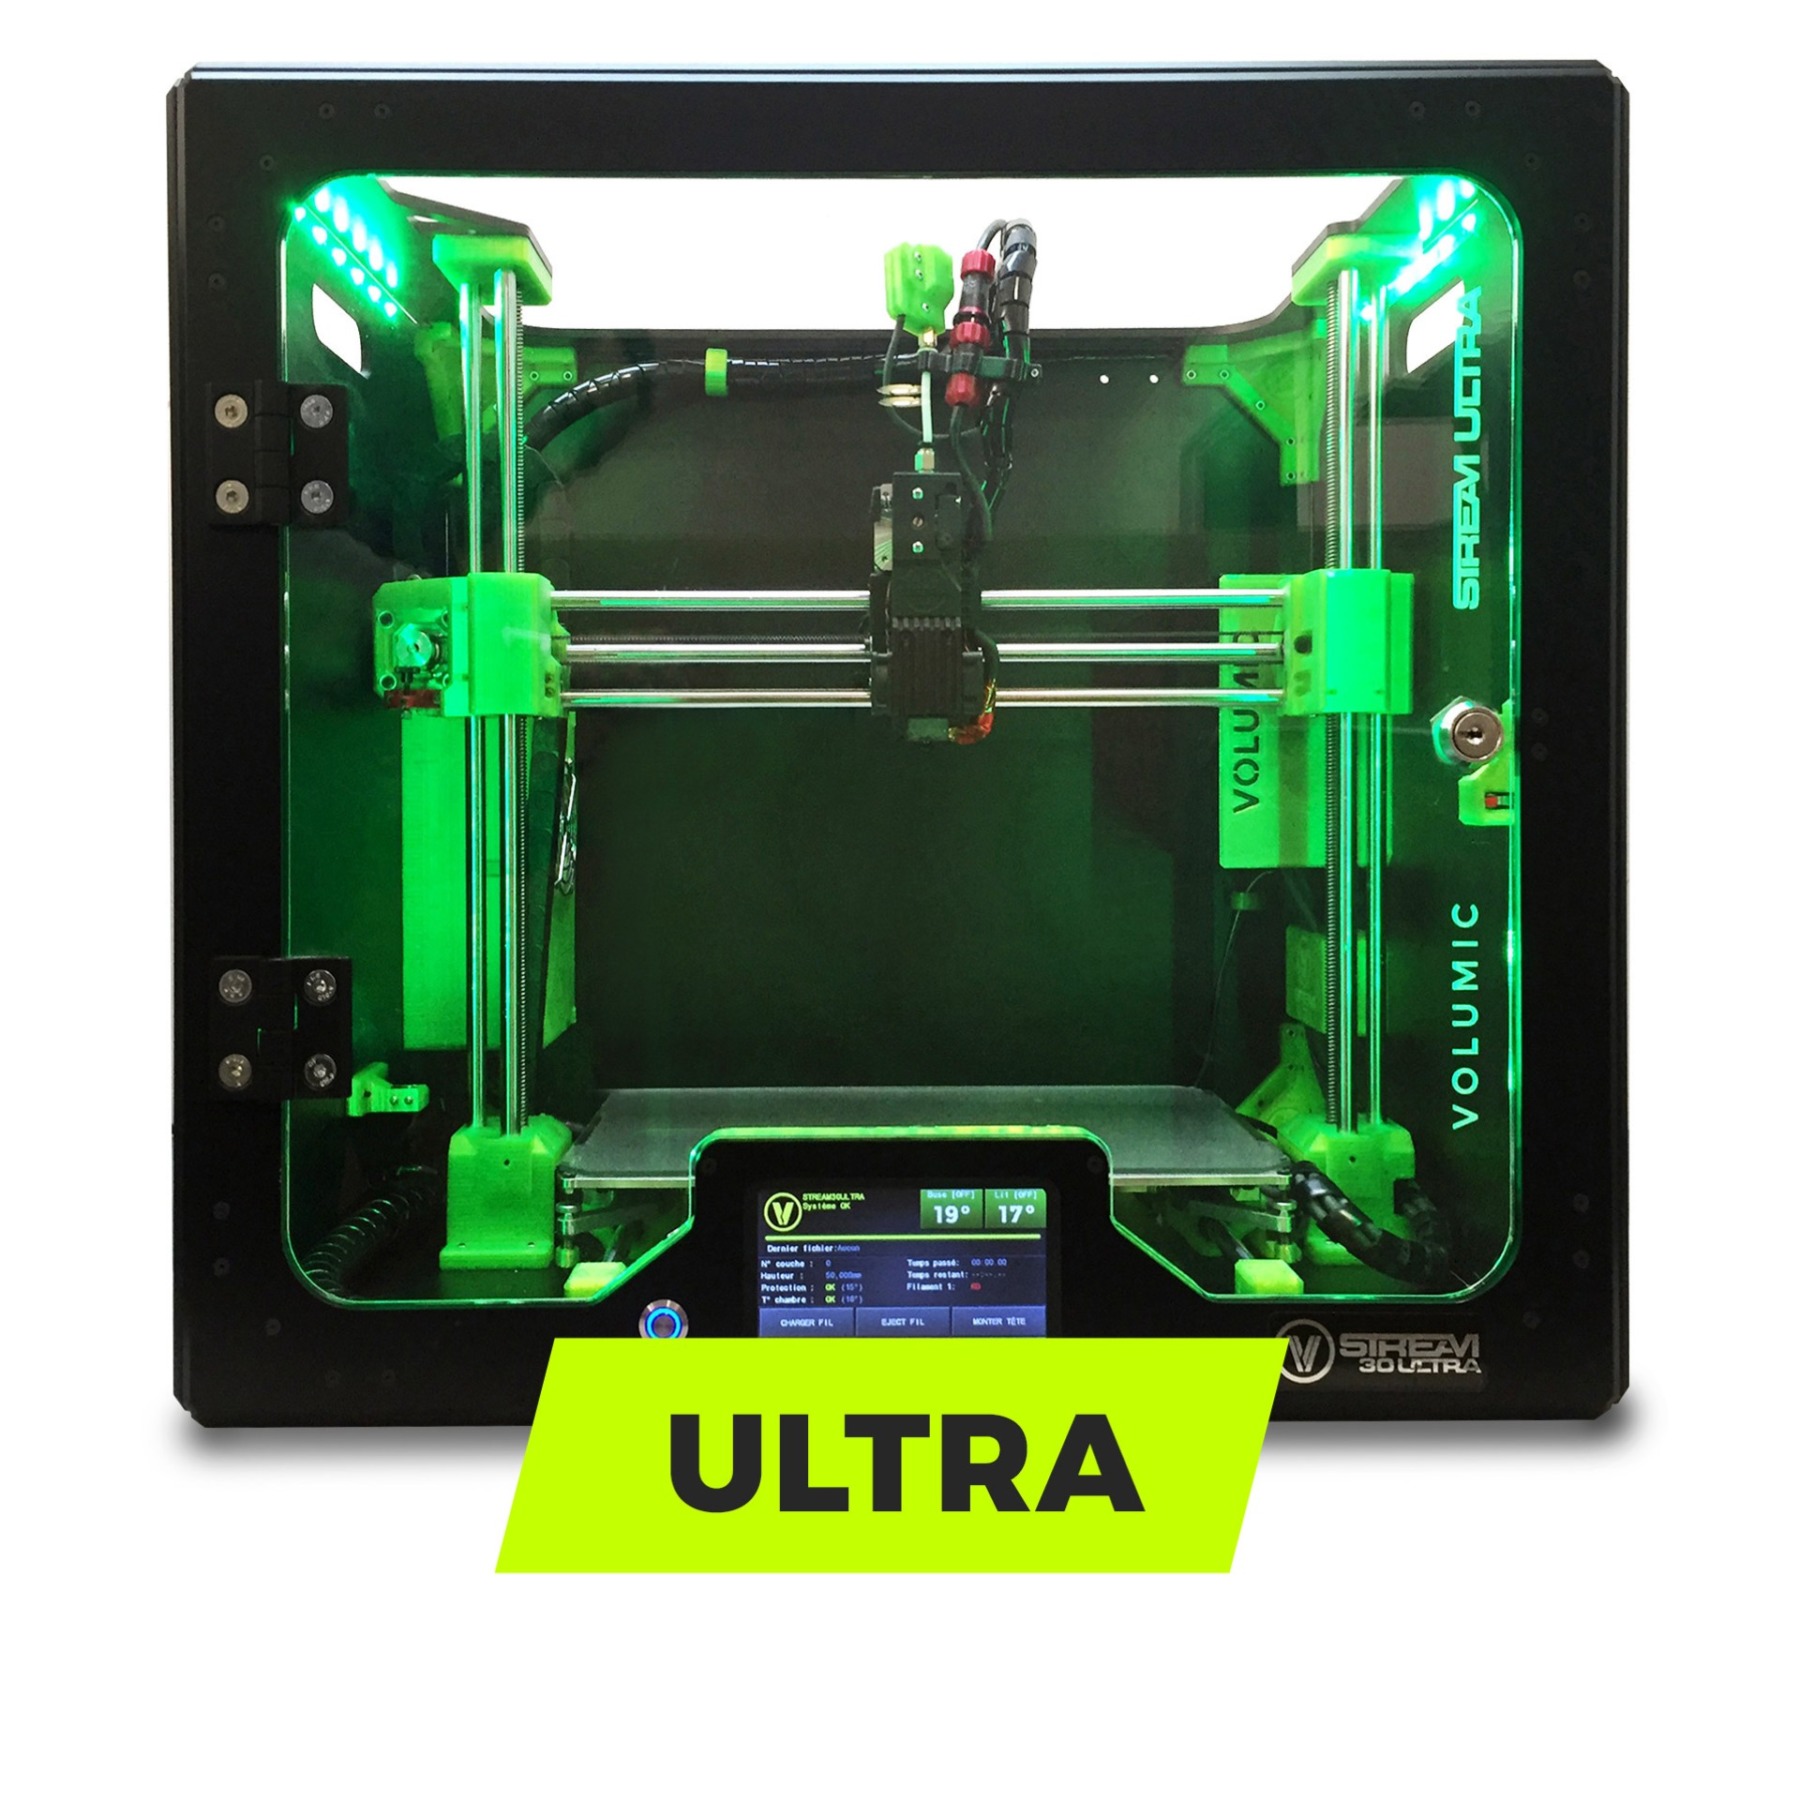 Imprimante 3D Volumic stream 30 ultra noire